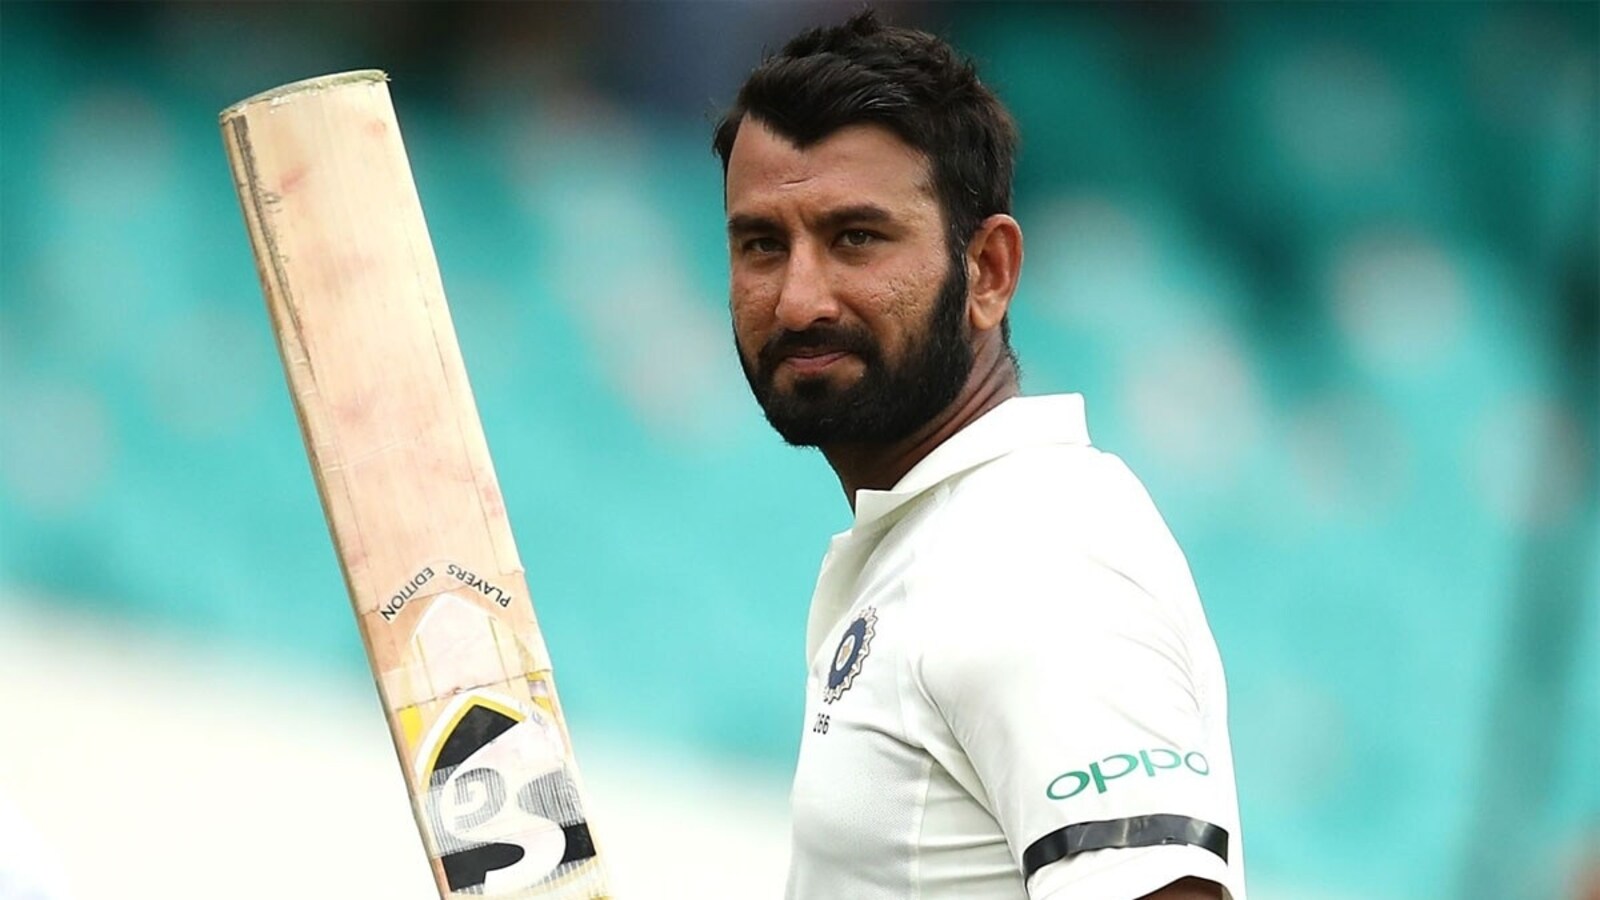 IND vs NZ Tests: Cheteshwar Pujara says “Hoping that he will score big runs" in supporting Ajinkya Rahane